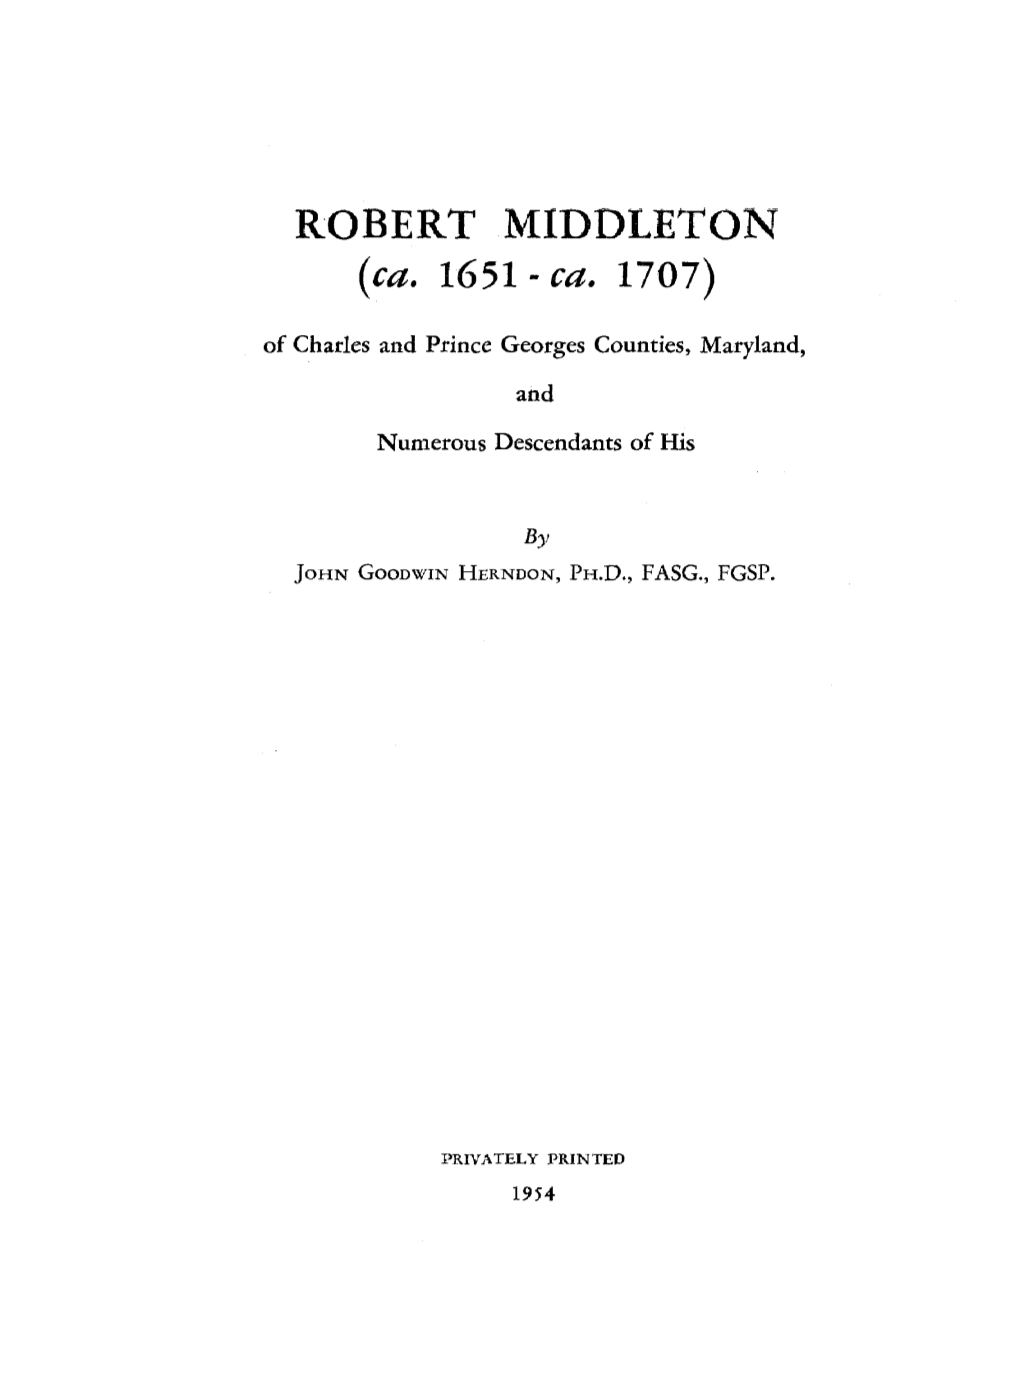 ROBERT MIDDLETON (Ca